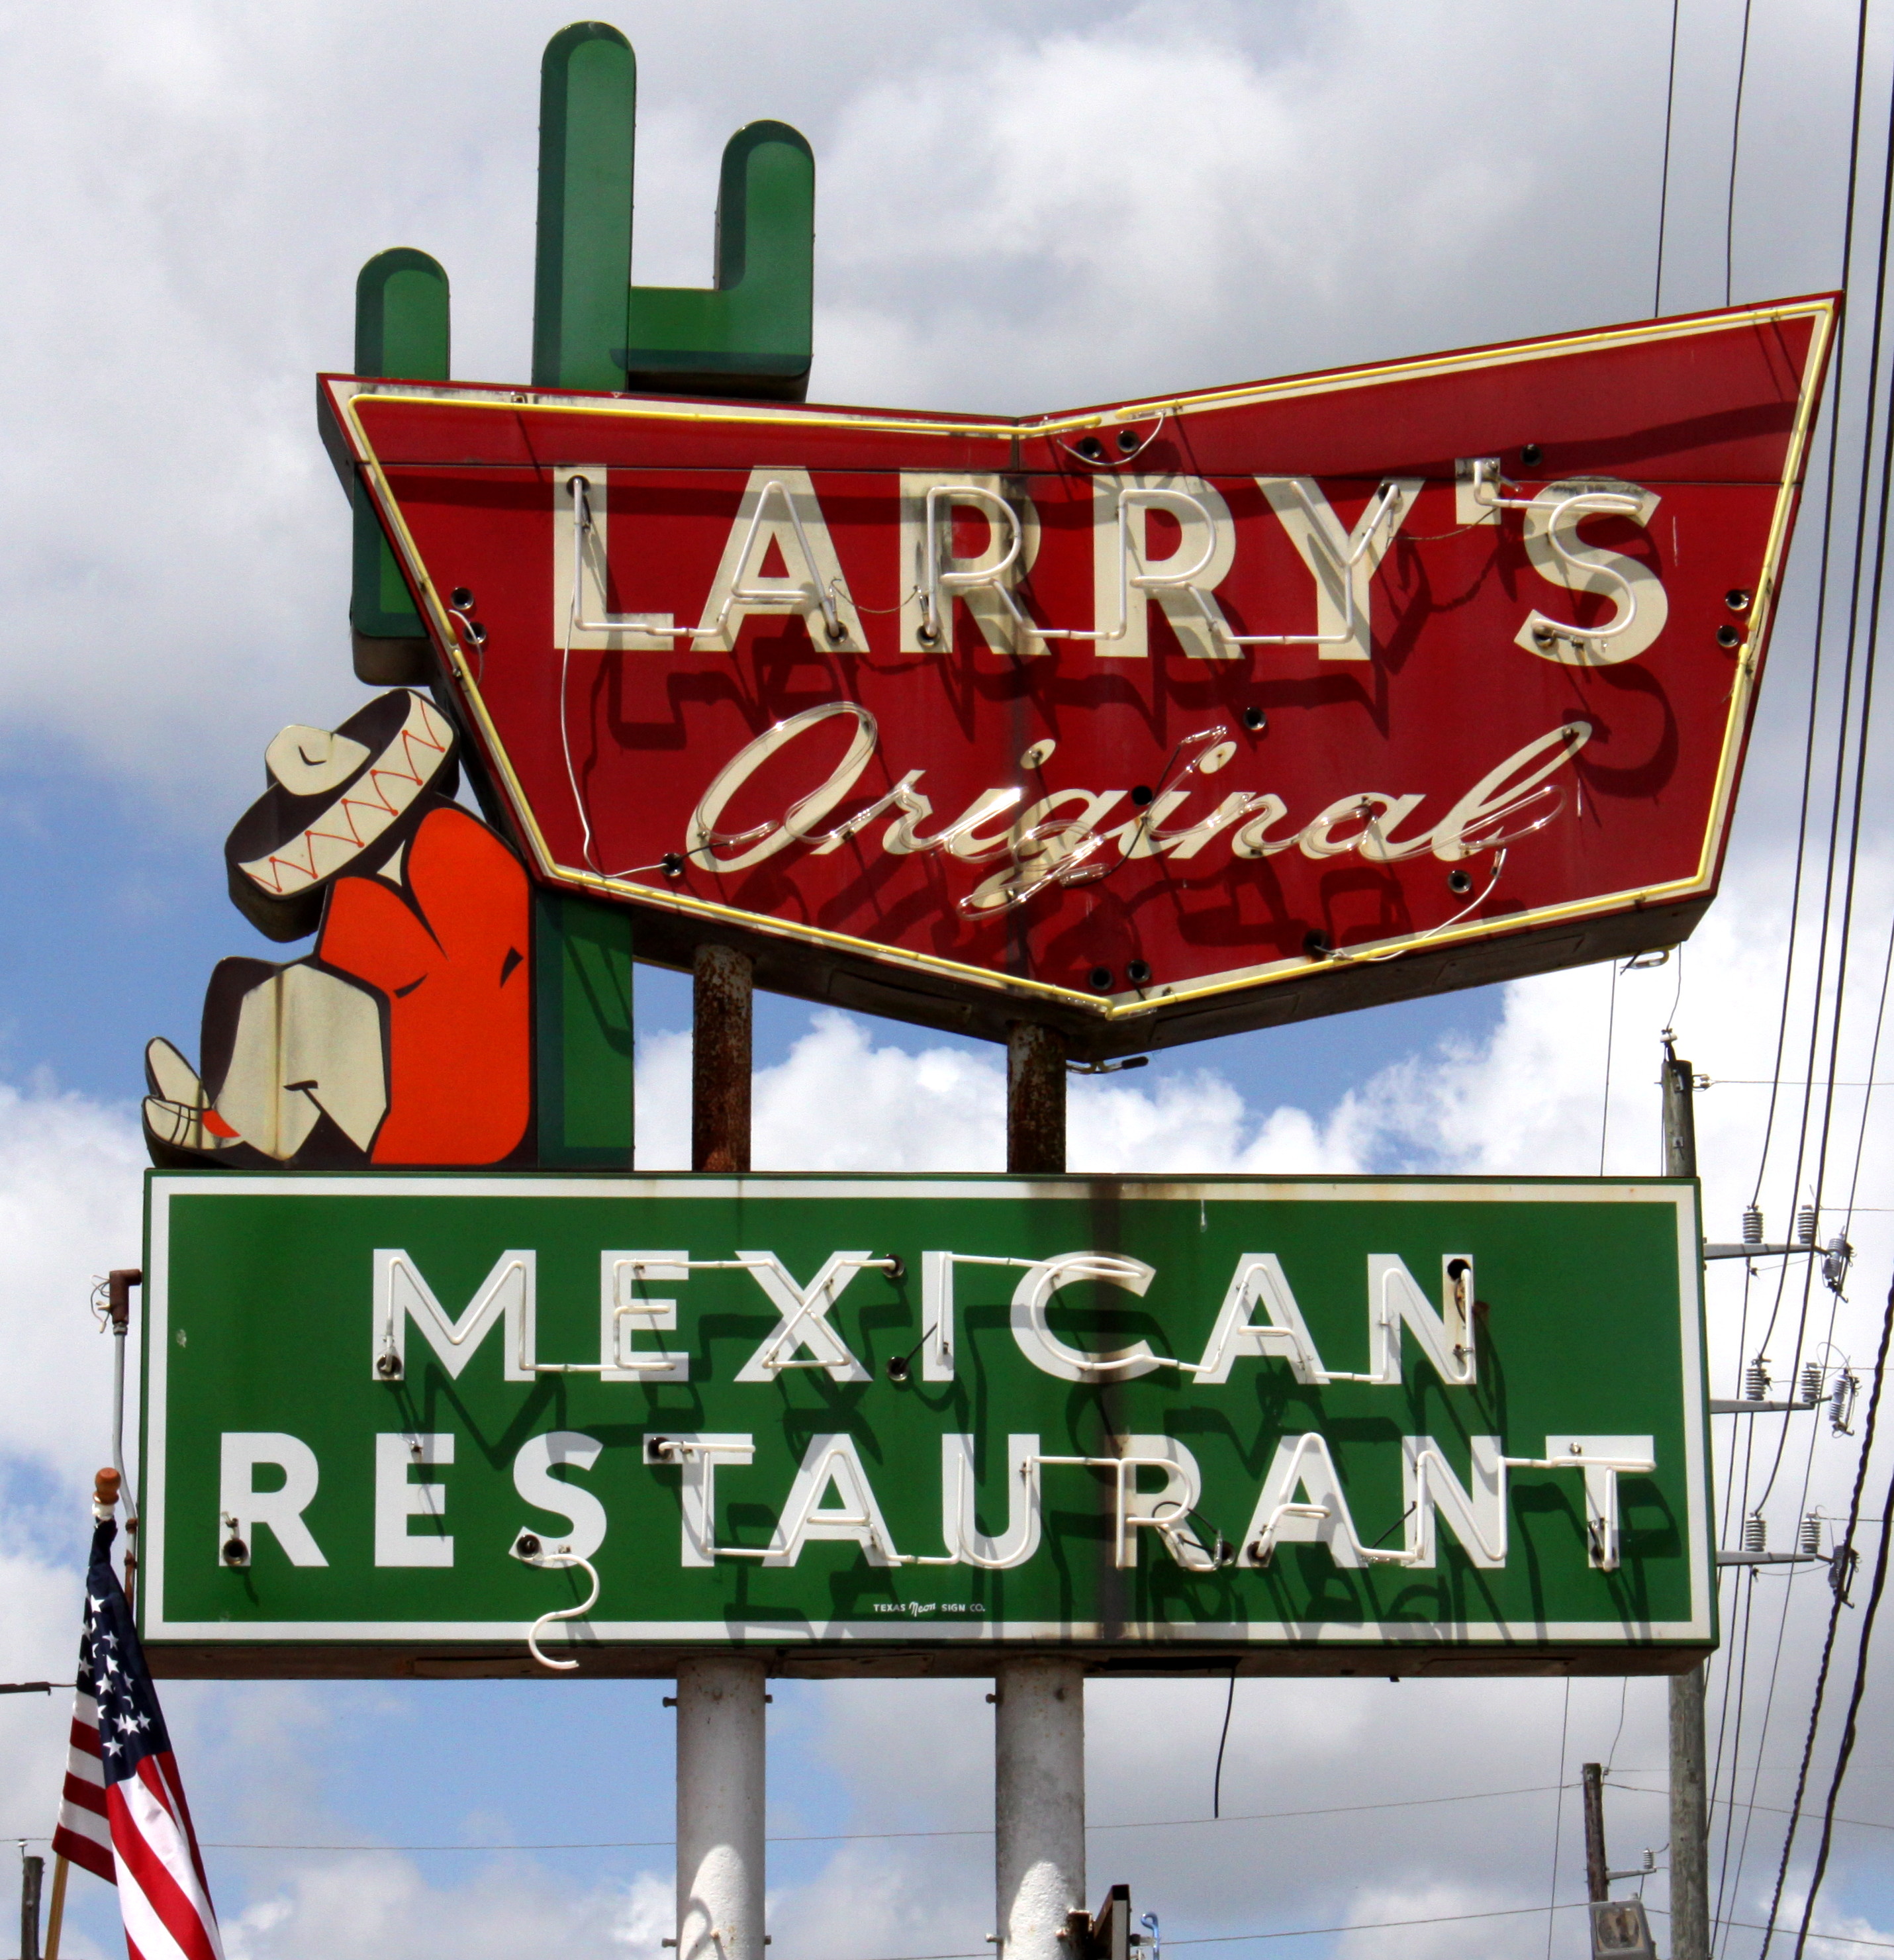 Larry's Original Mexican Restaurant - 116 East Highway 90 Alternate No. 3720, Richmond, Texas U.S.A, - May 25, 2019